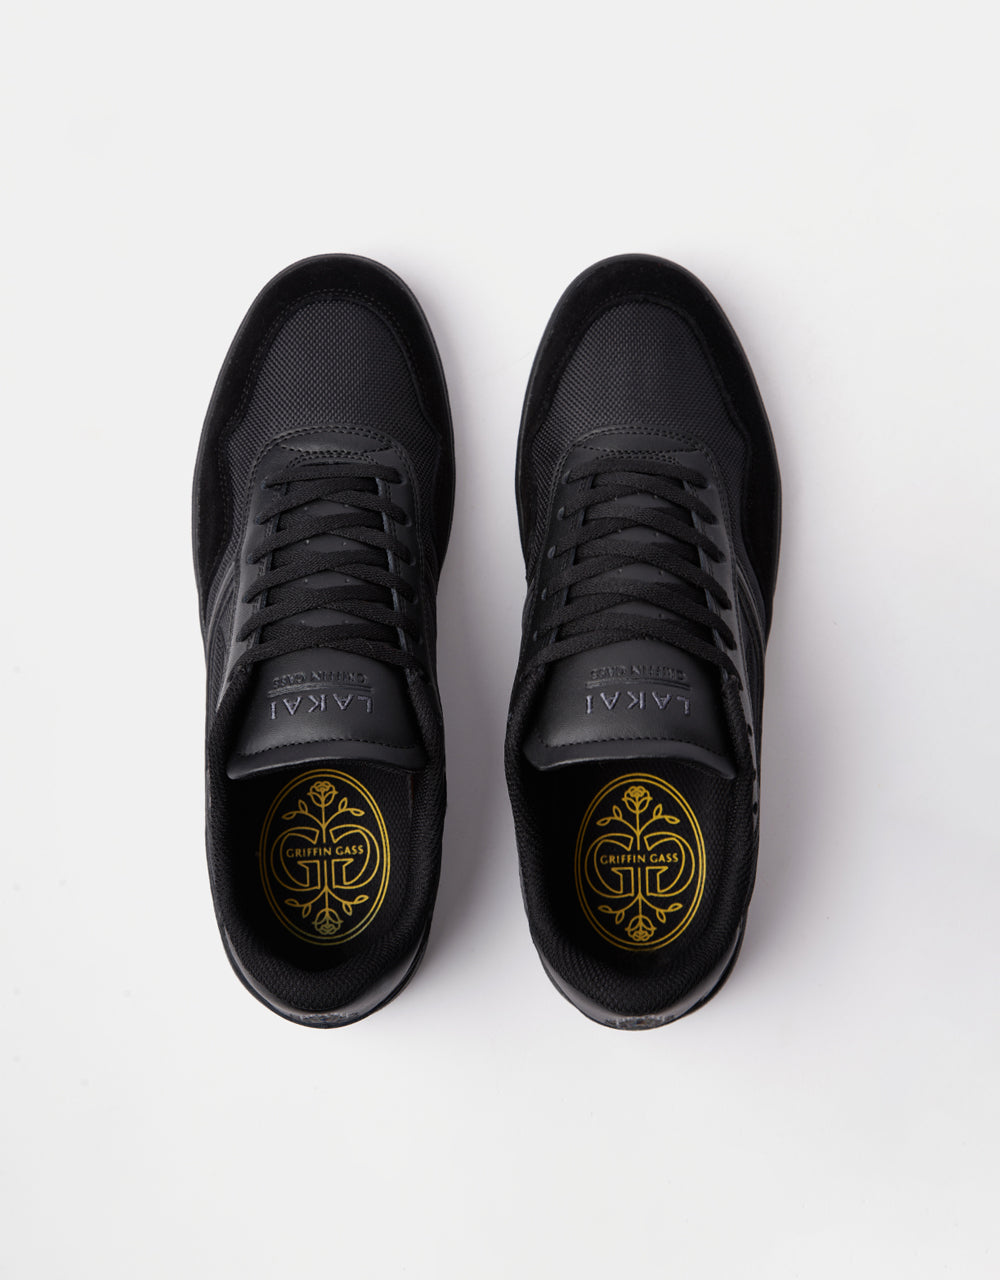 Lakai Terrace Skate Shoes - Black/Black Suede